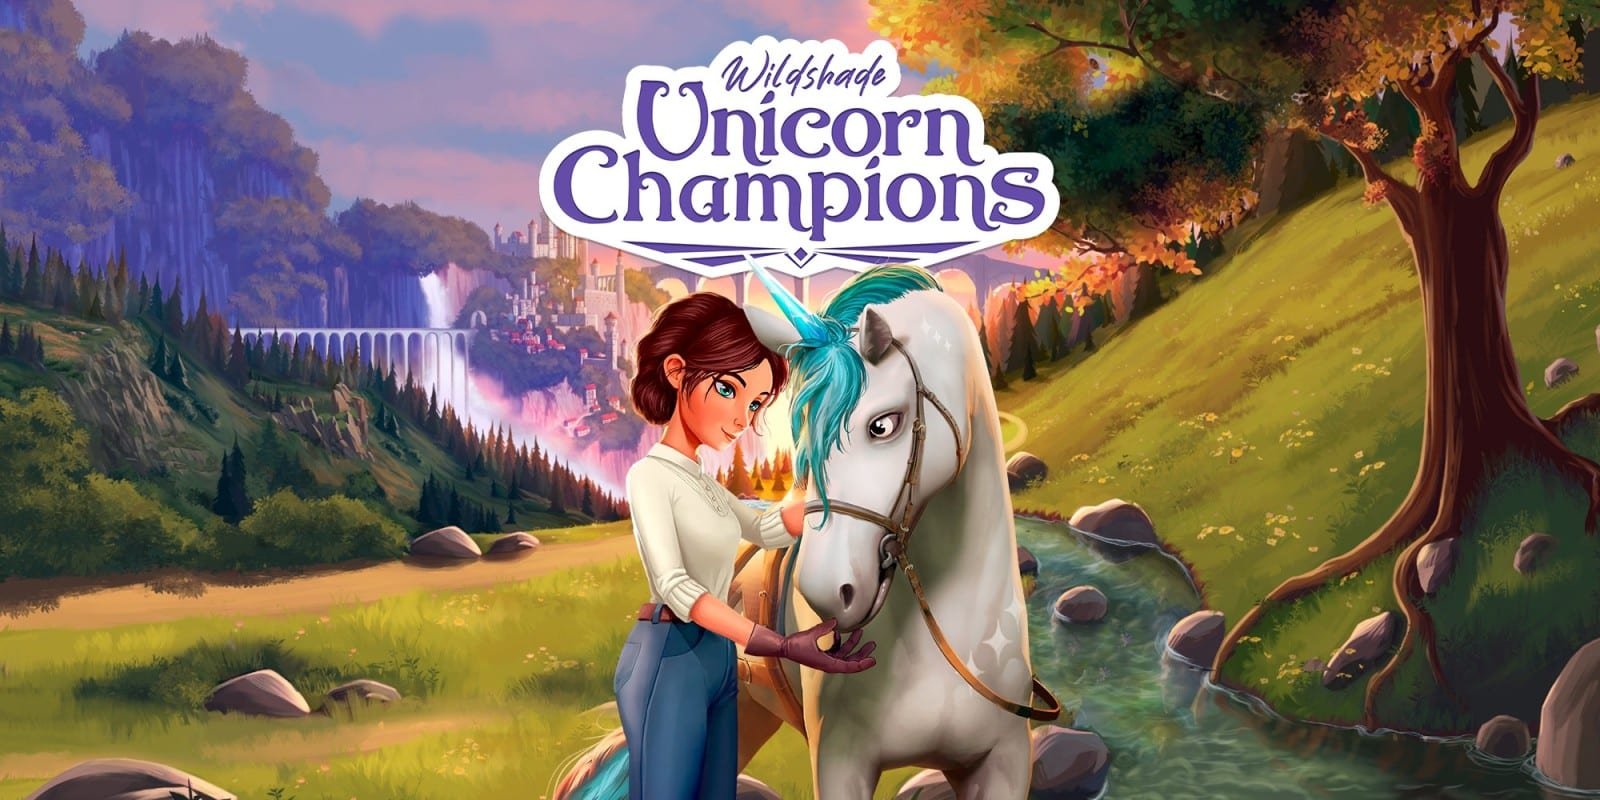 Wildshade: Unicorn Champions: le jeu sort aujourd’hui sur Nintendo Switch